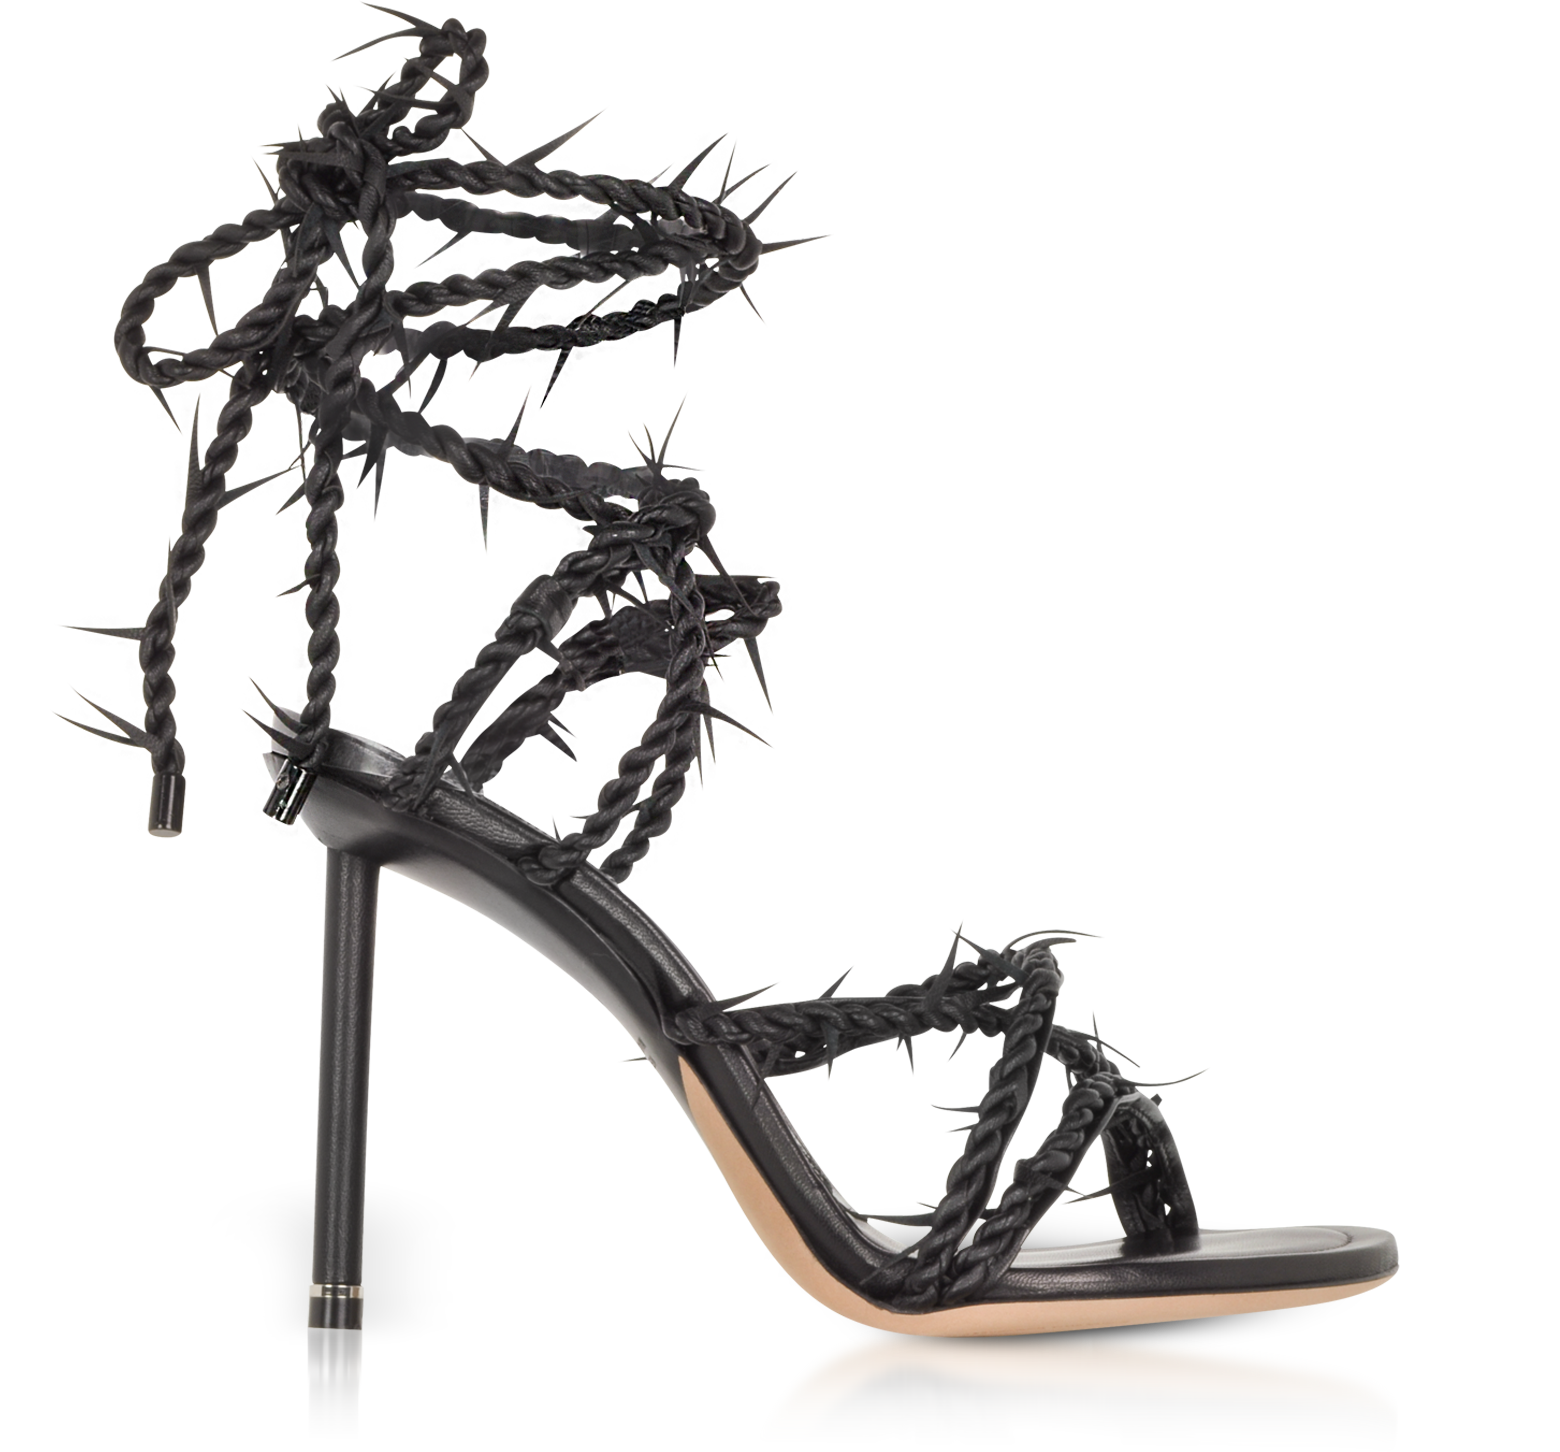 a wang heels